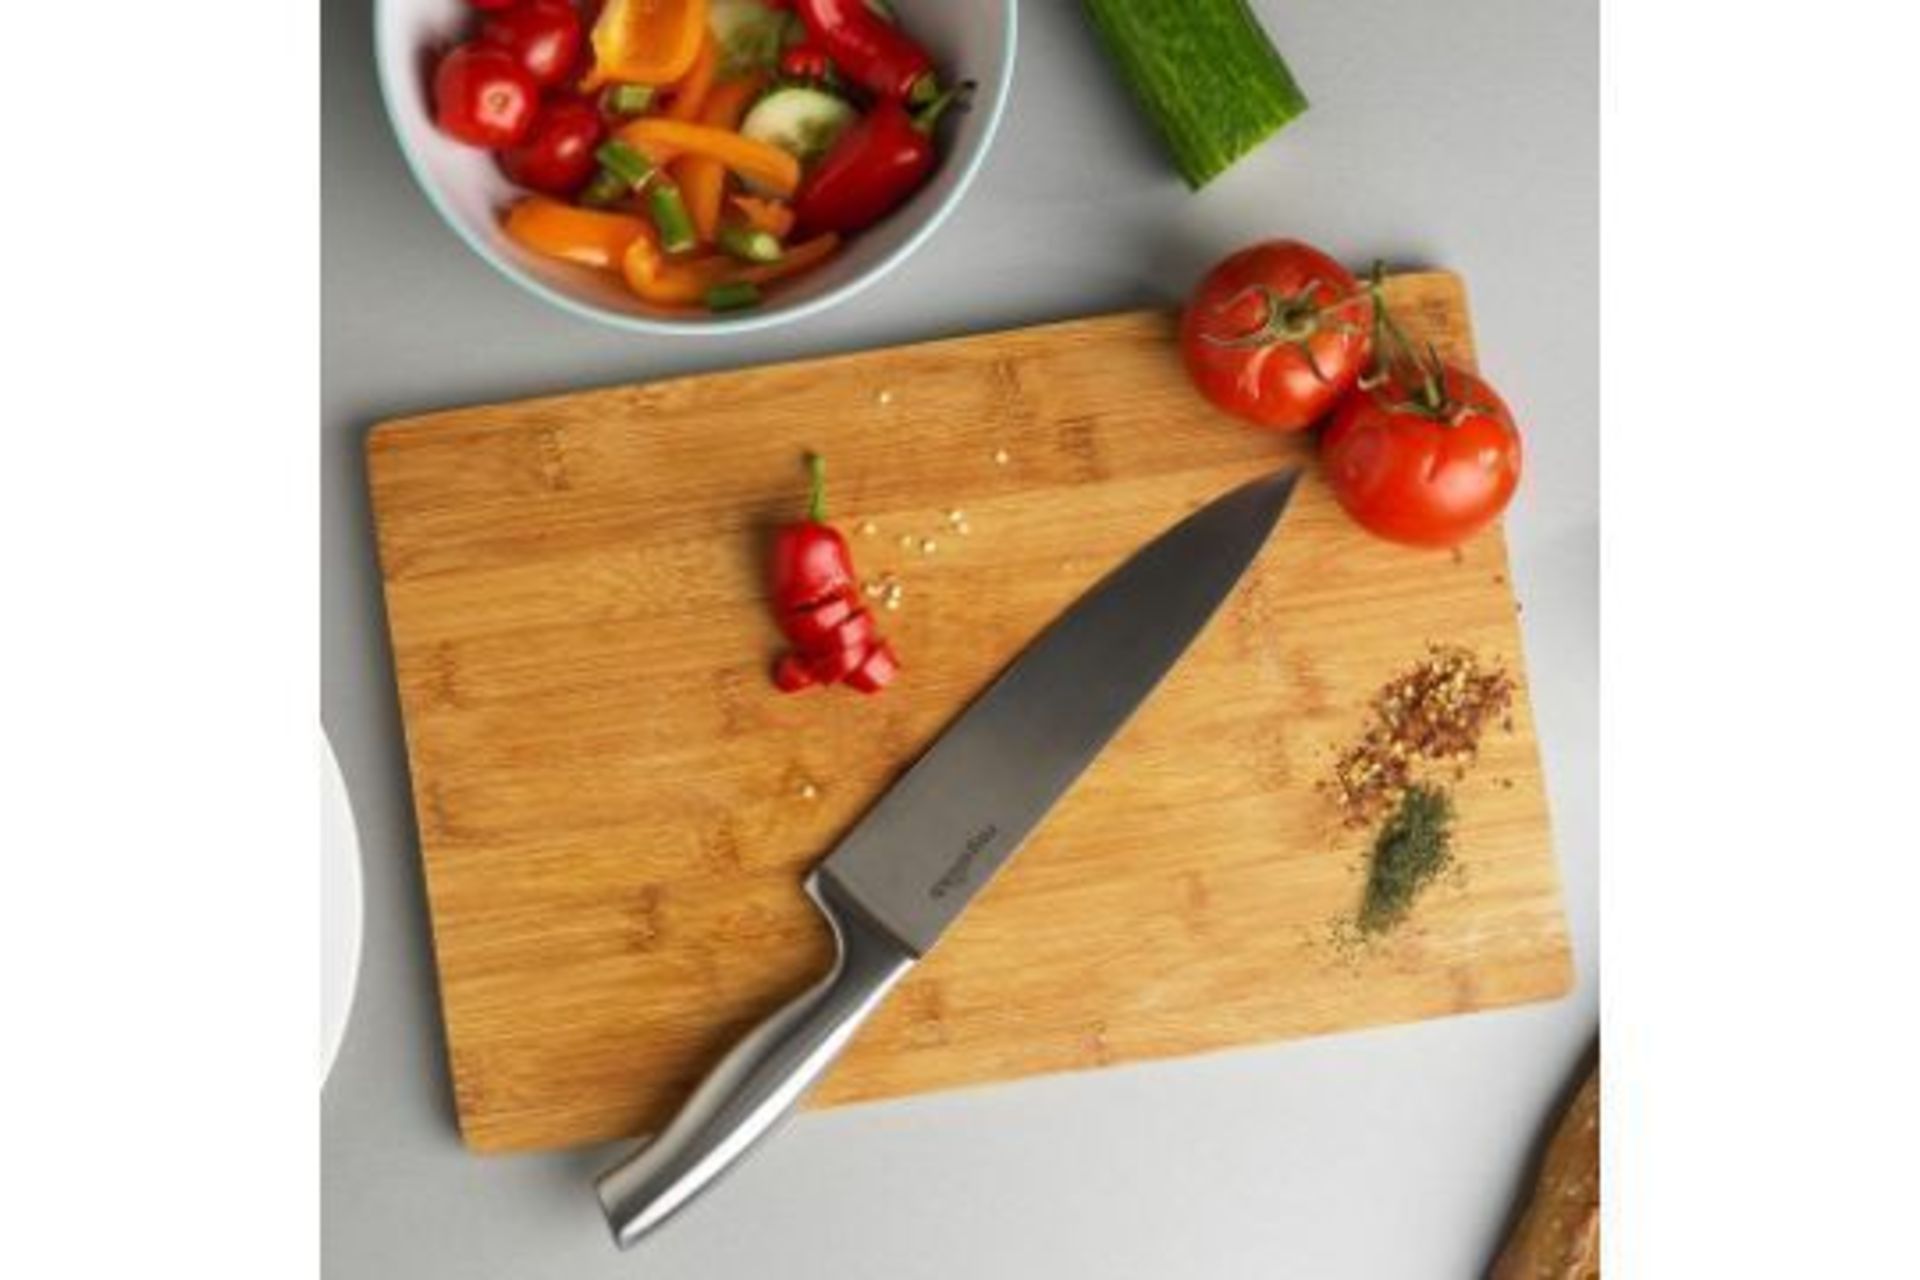 New Royal VKB Chefs Knife